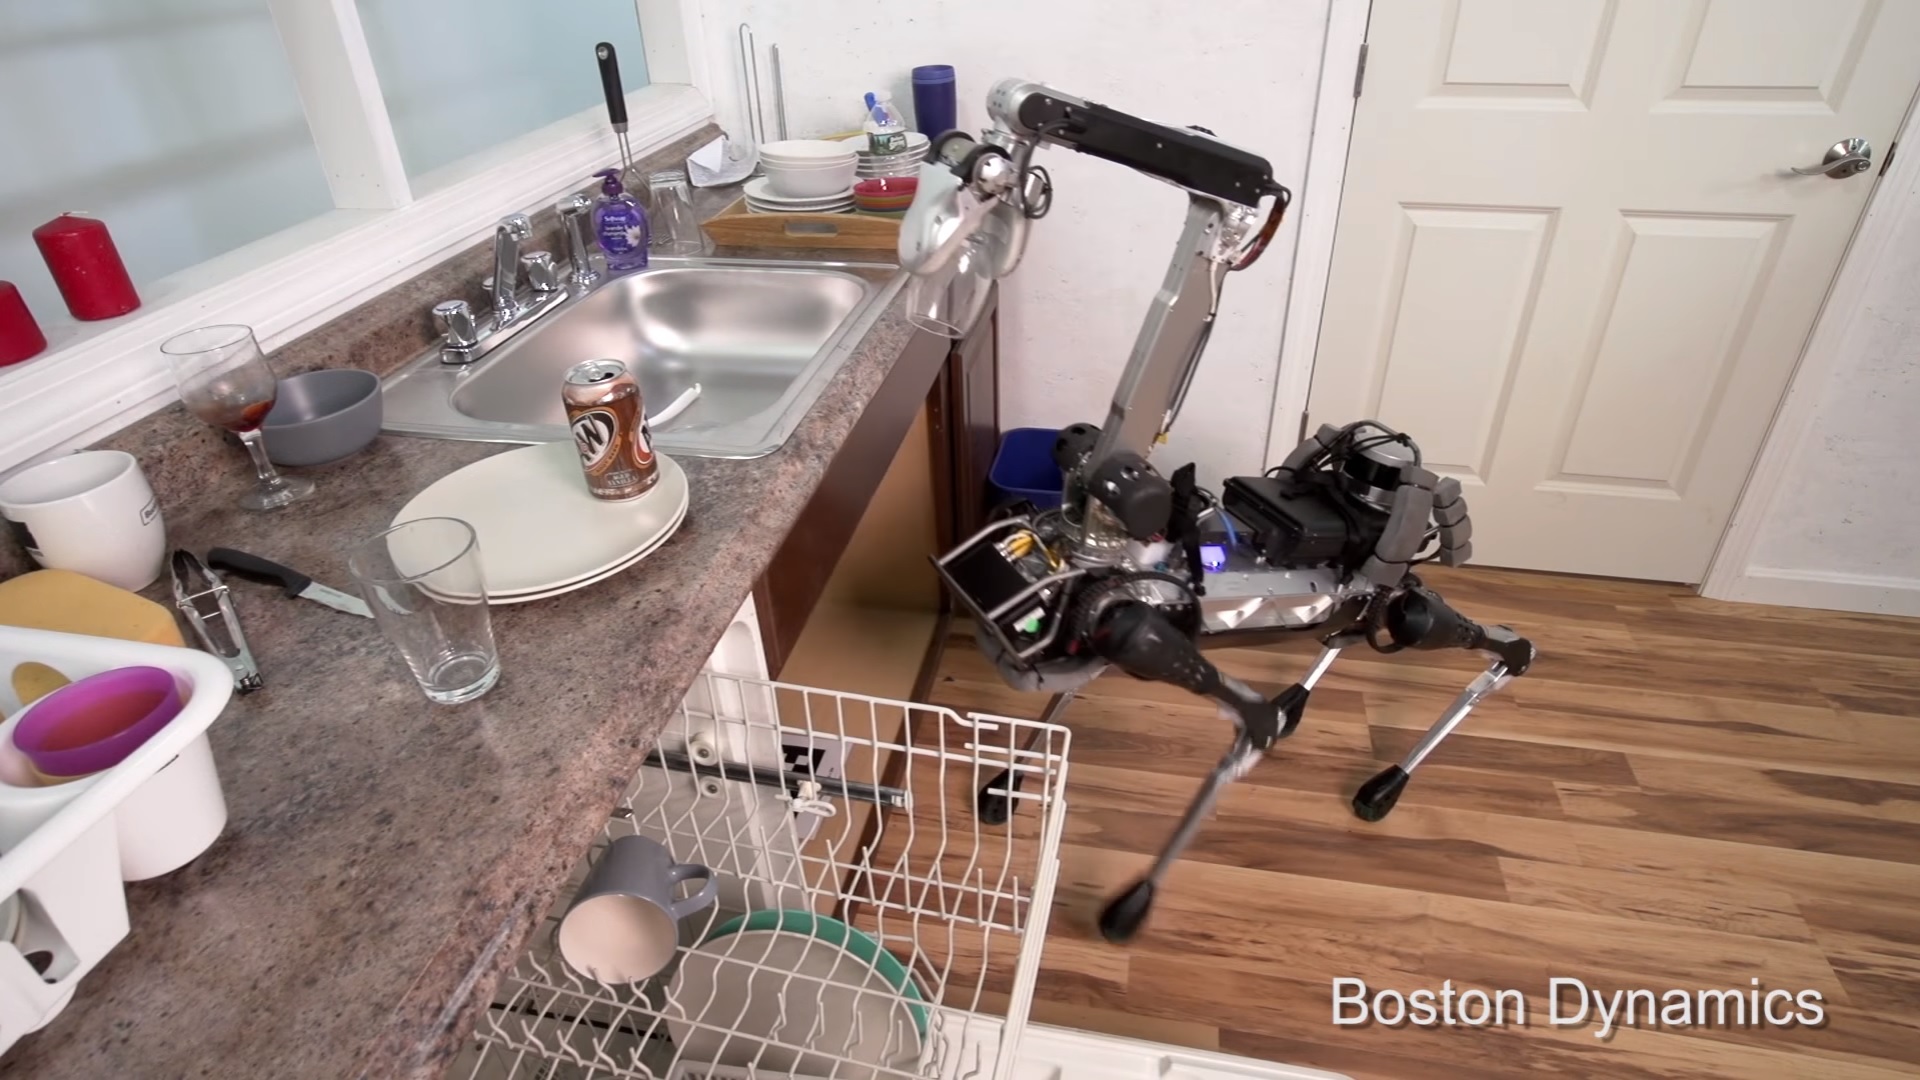 SpotMini es el último robot can de Boston Dynamics enfocado a los hogares